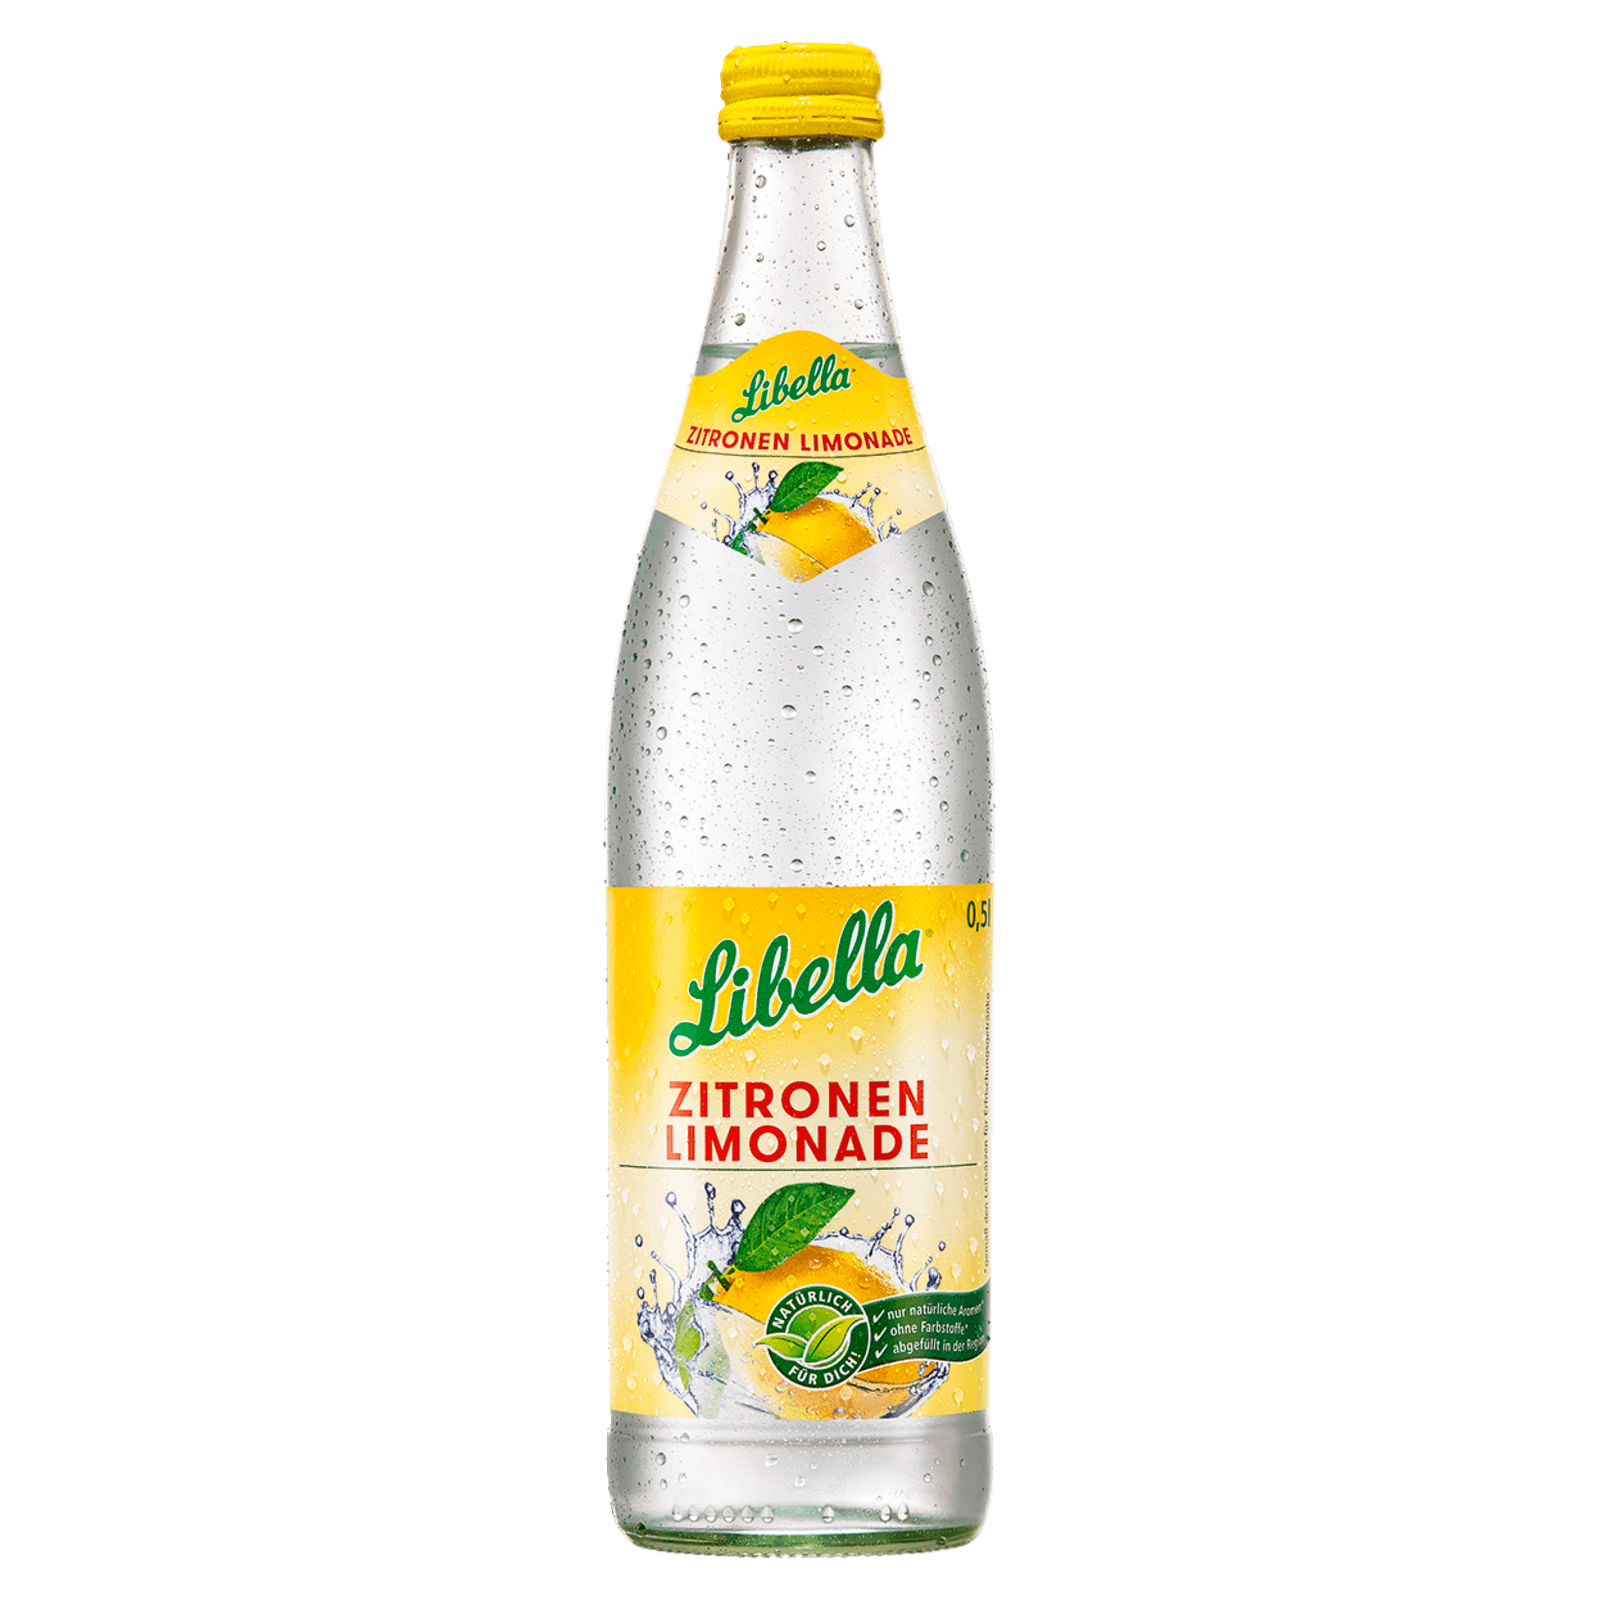 Libella Zitronen Limonade 0,5l  für 0.69 EUR